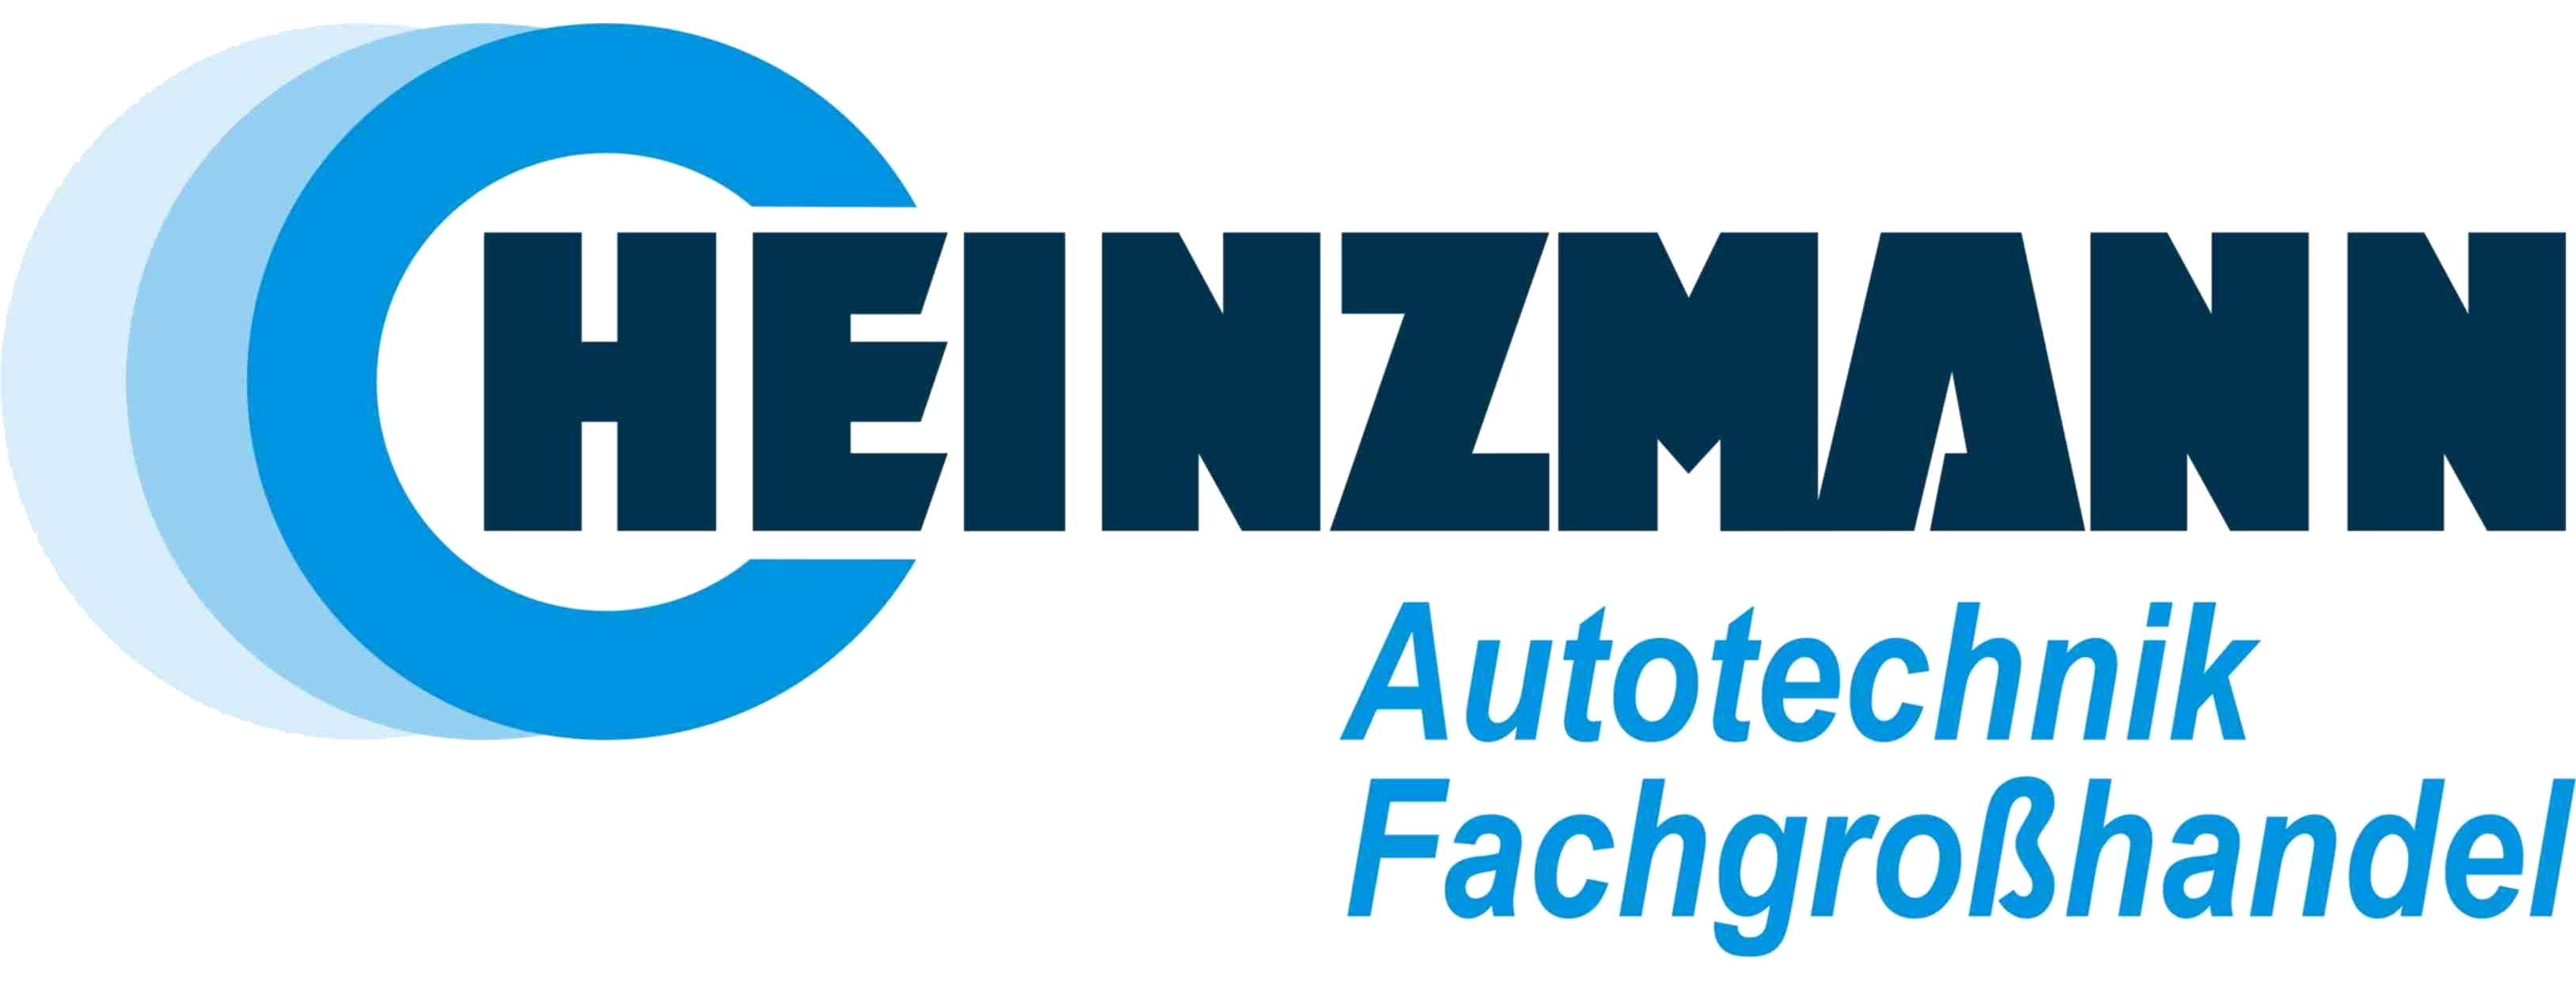 Heinzmann - Autotechnik Fachgoßhandel -  Logo ohne Leitsatz 3252x1243